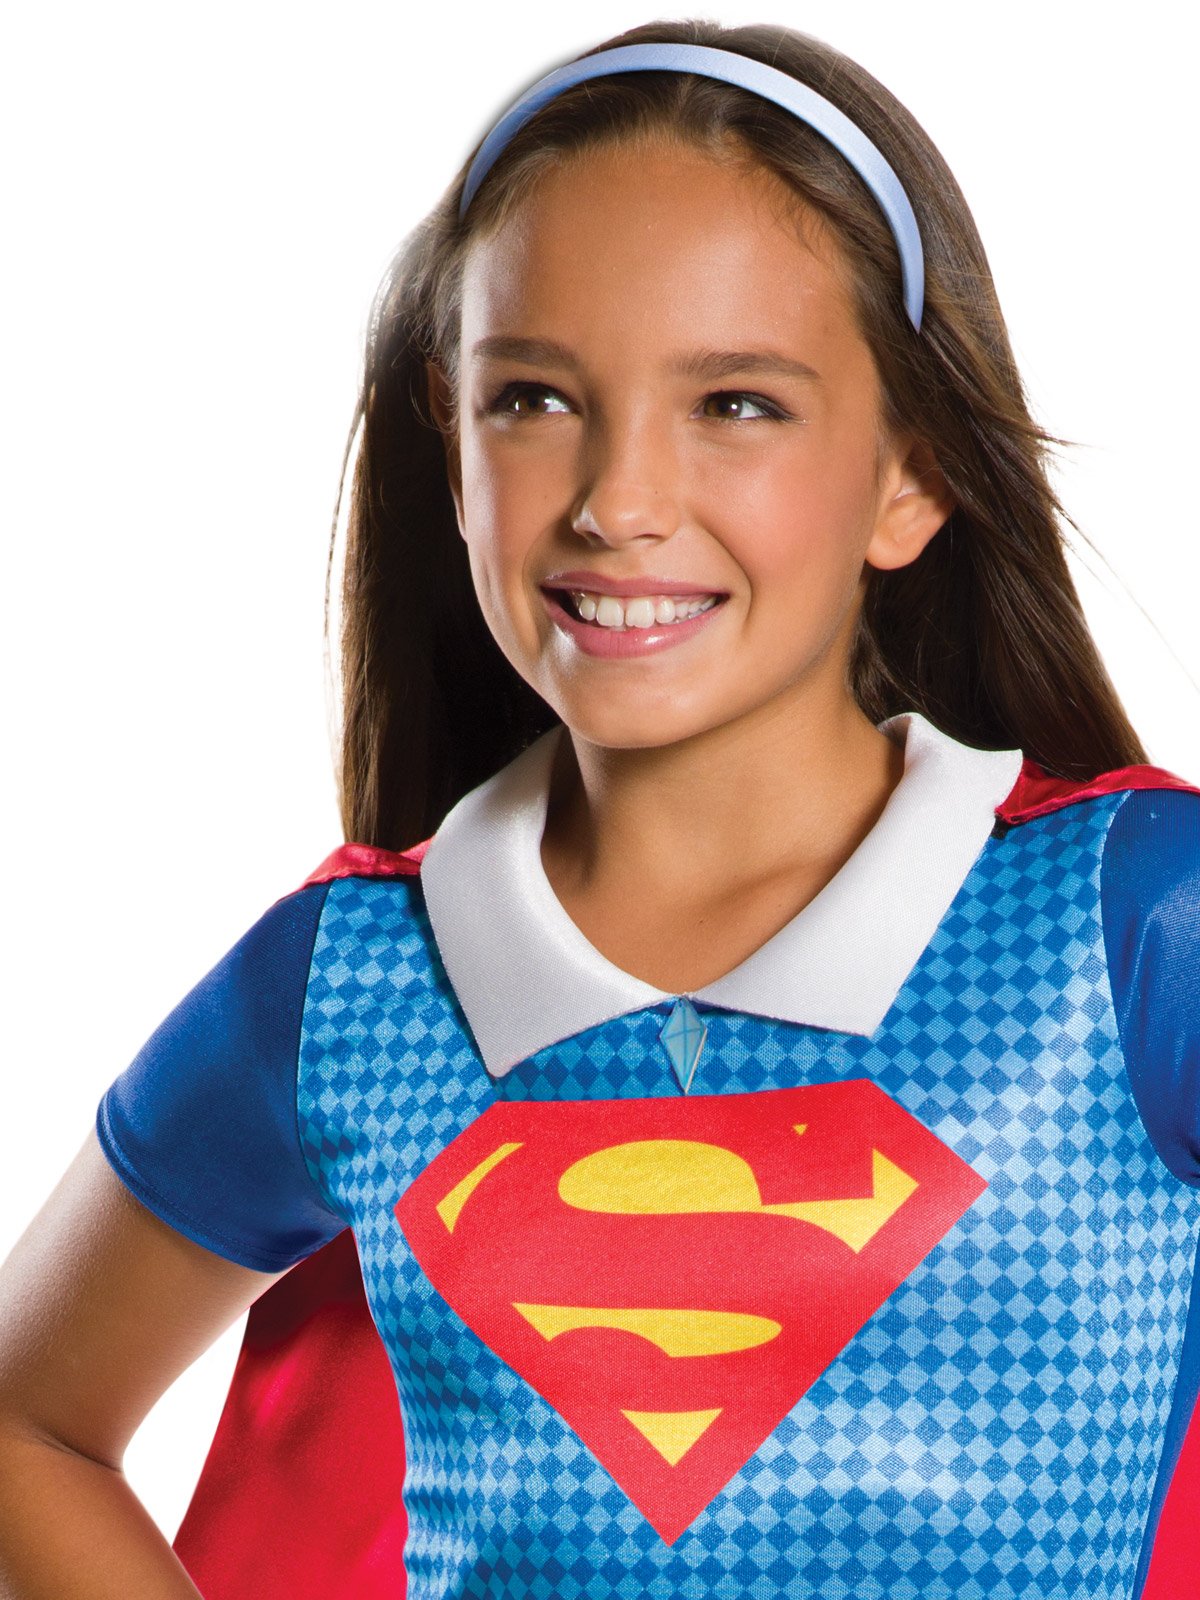 Costume Child Supergirl Superhero Deluxe Classic Size 6-8